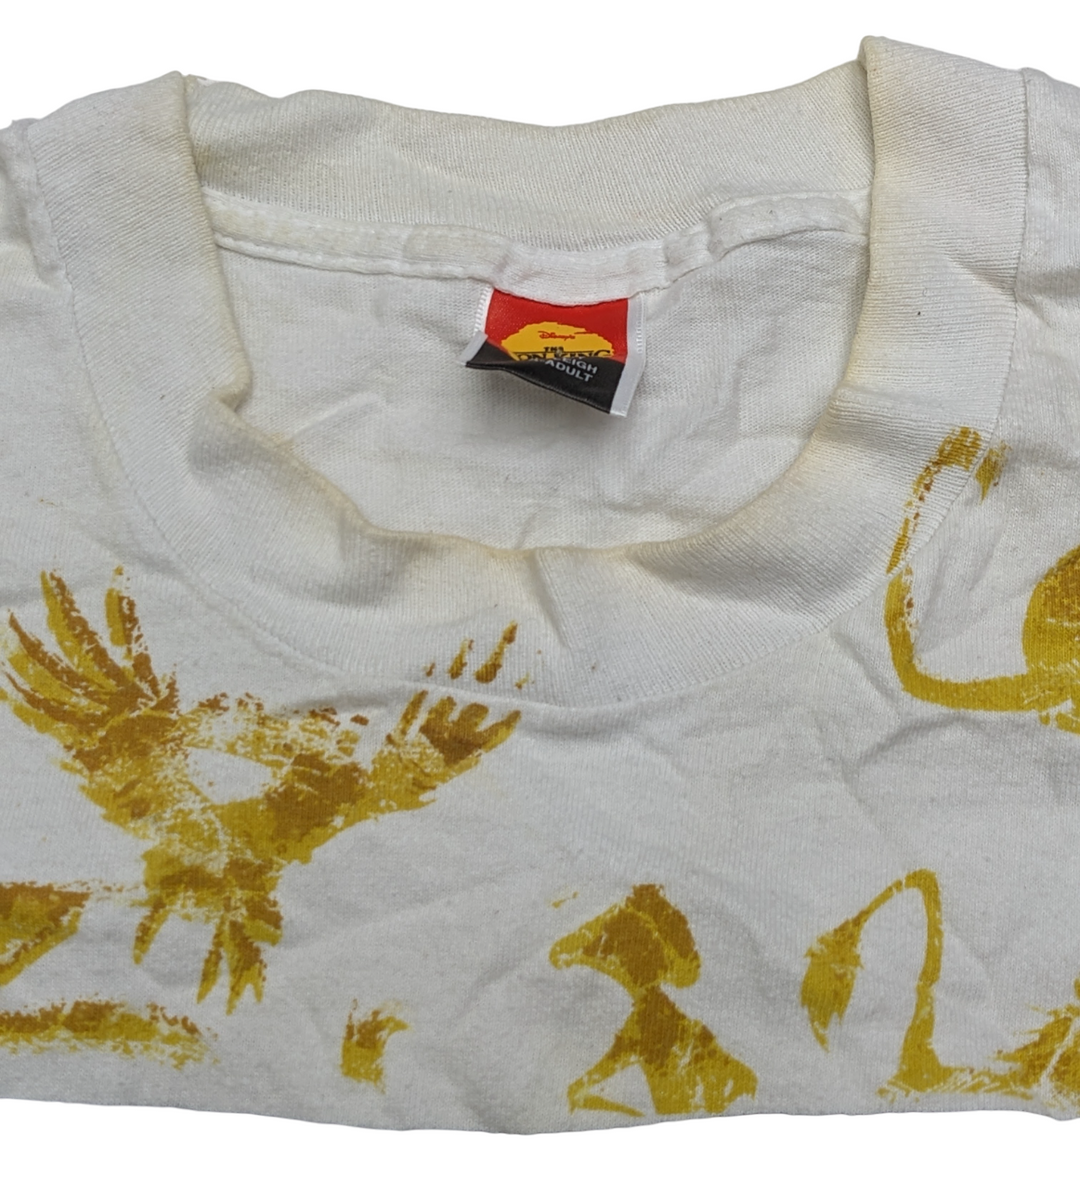 Vintage Disney Jerry Leigh The Lion King T-Shirt 1 pc 1 lb A0418211